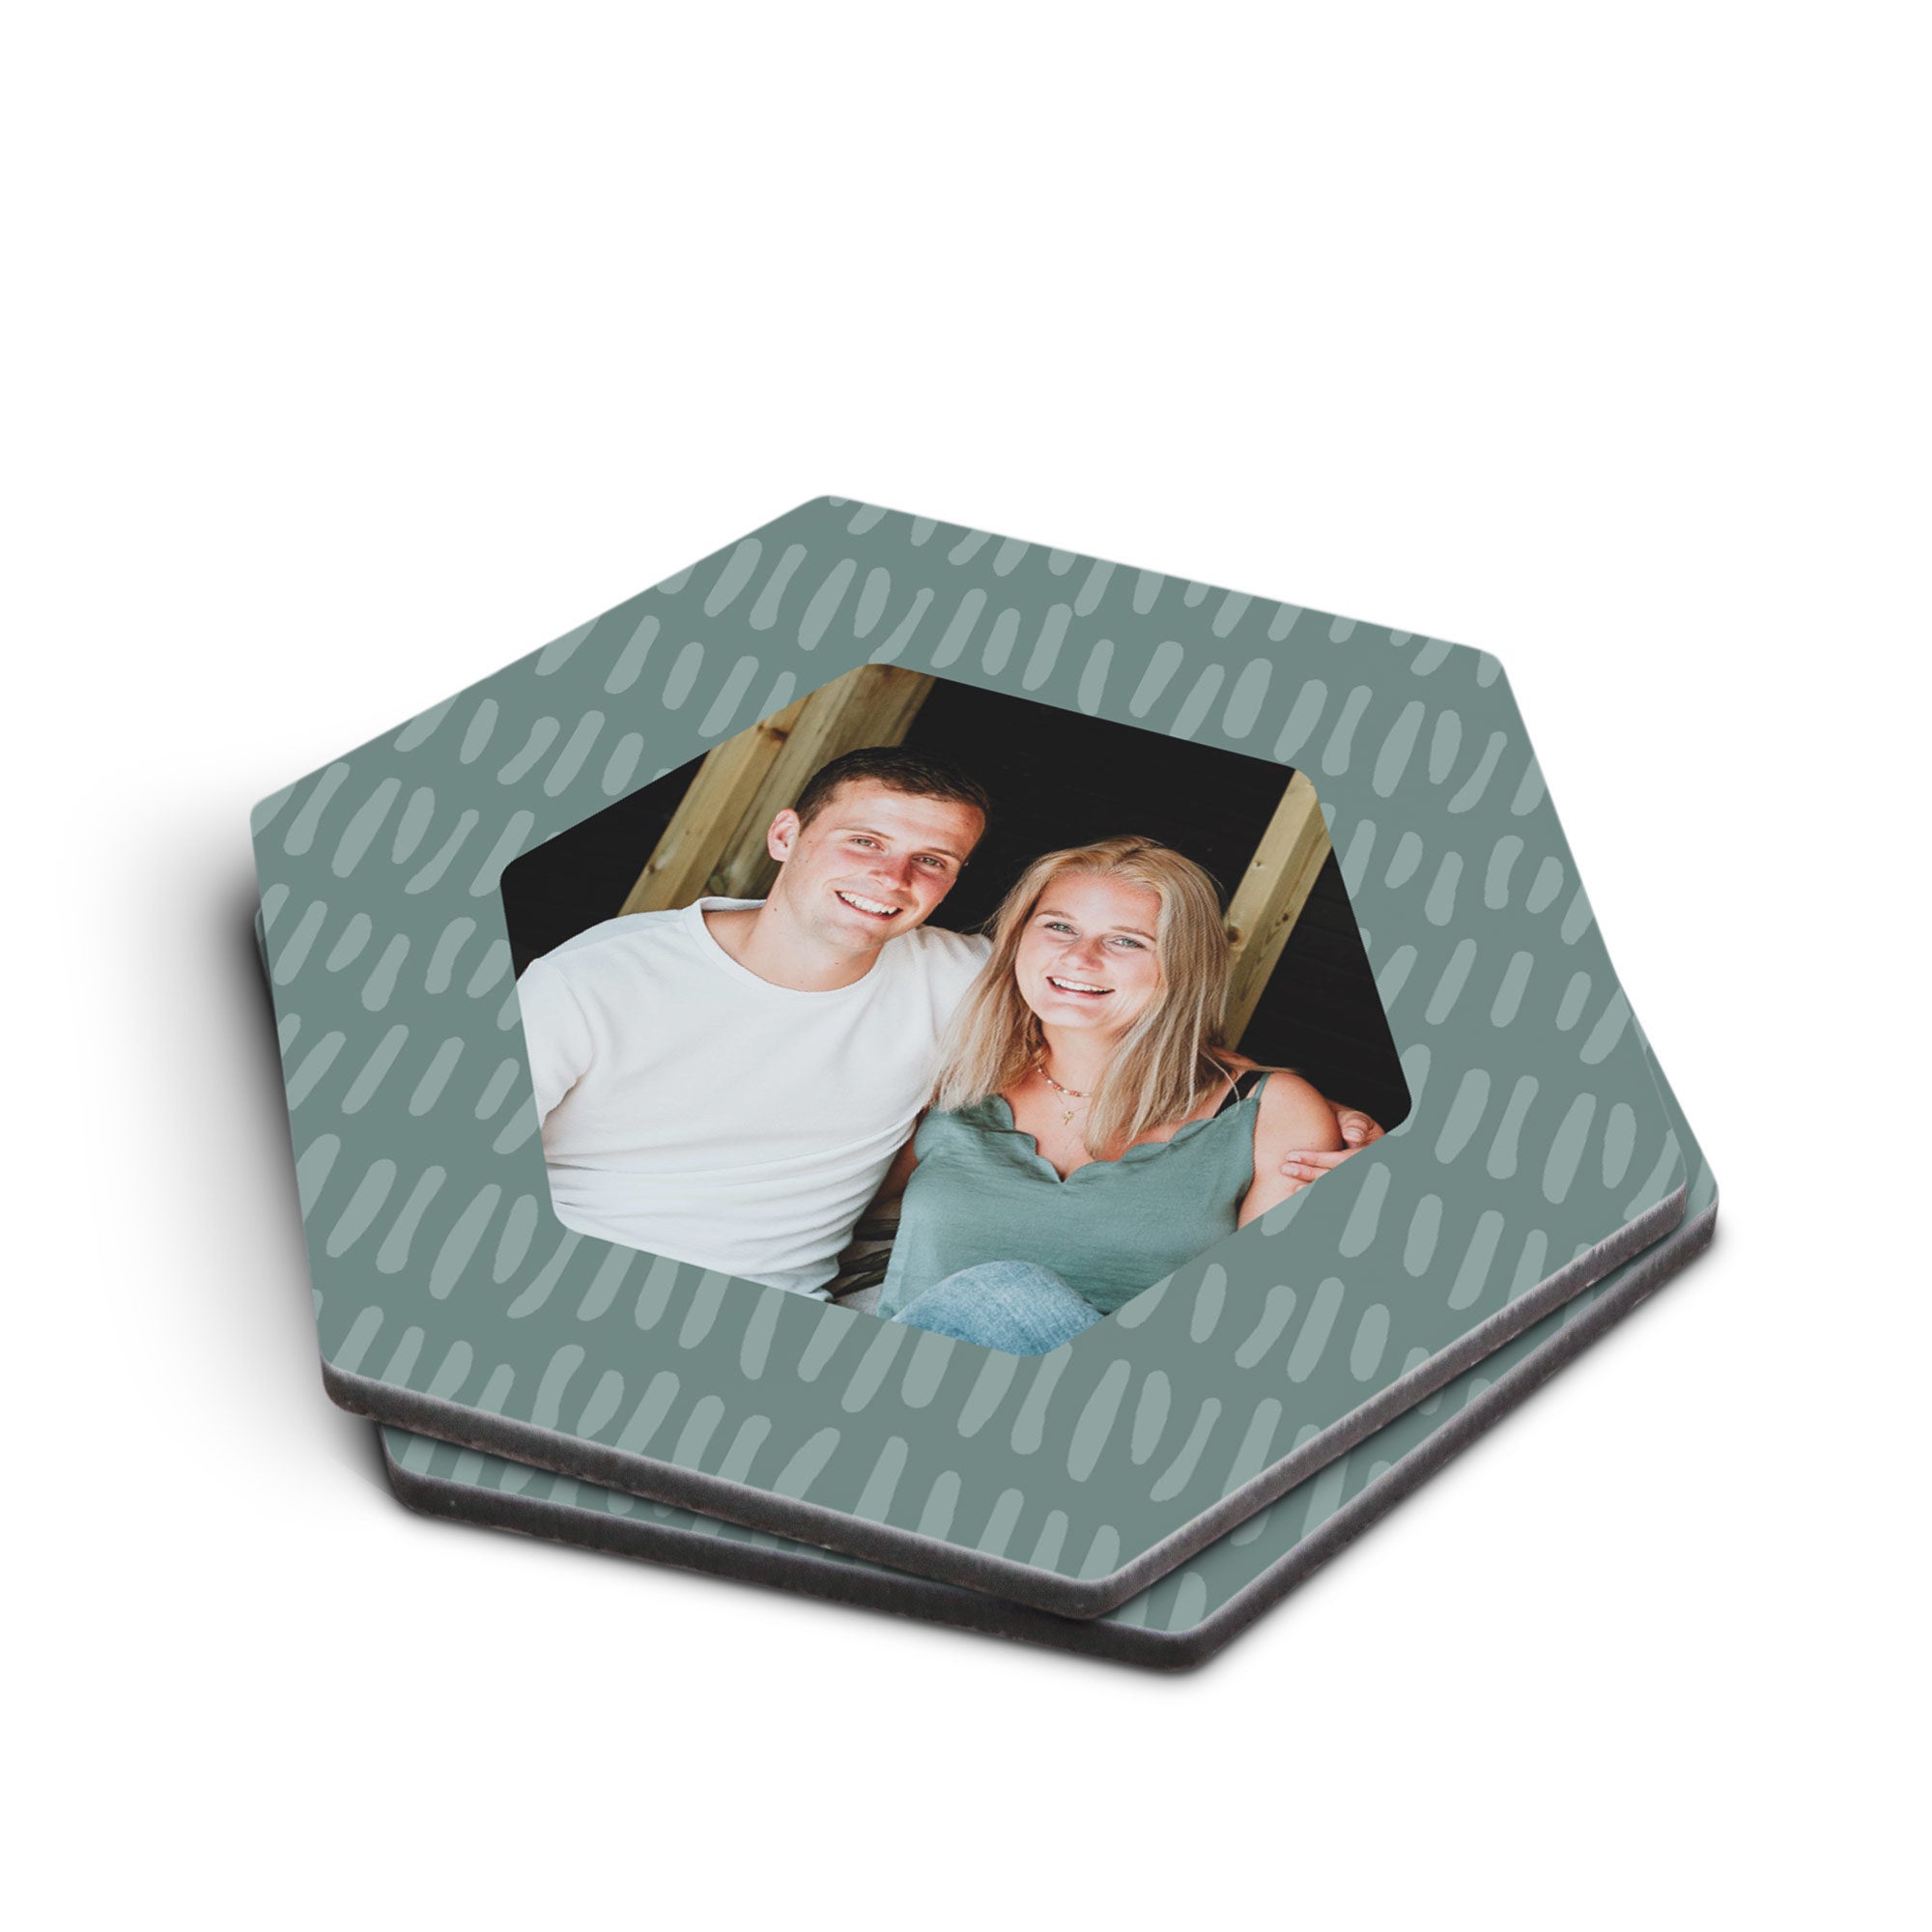 Personalised coasters - Hexagon - Set of 2